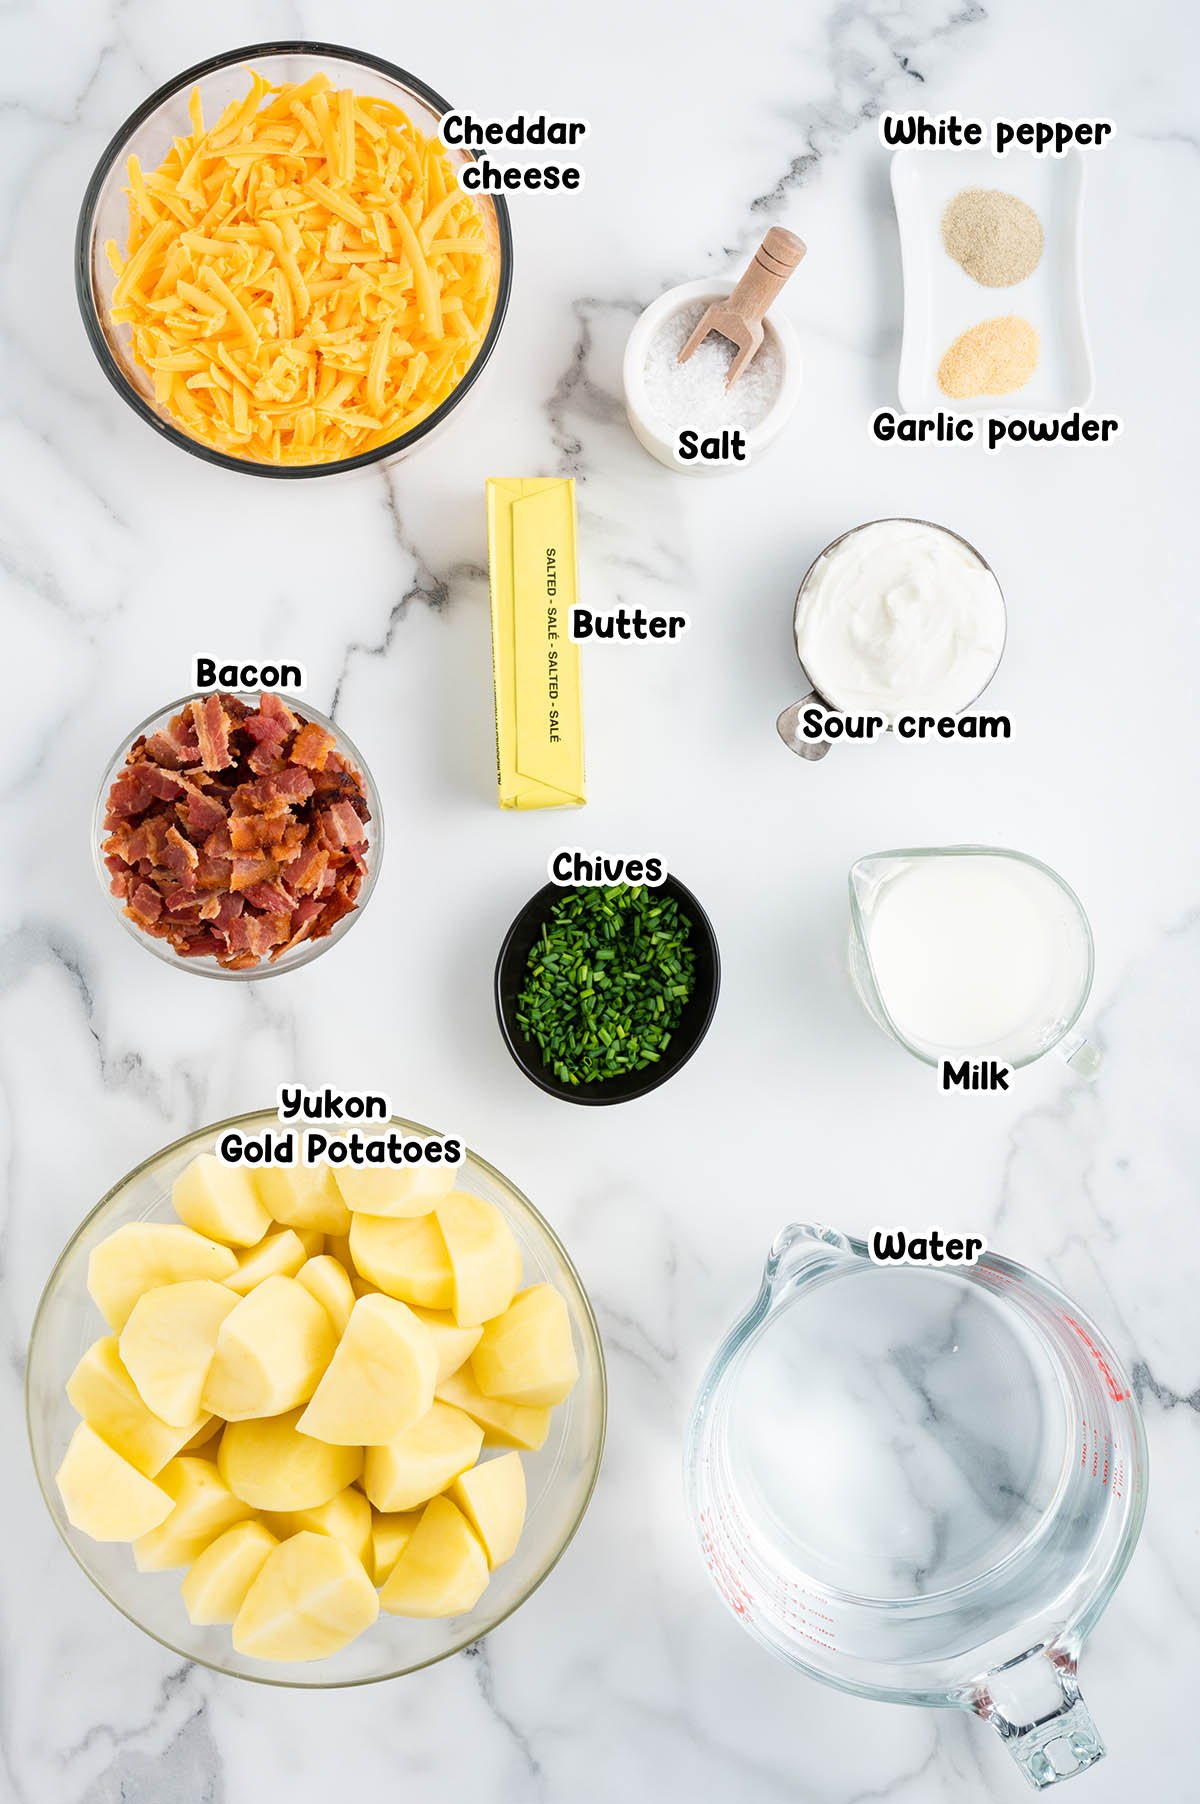 mashed potato casserole ingredients.